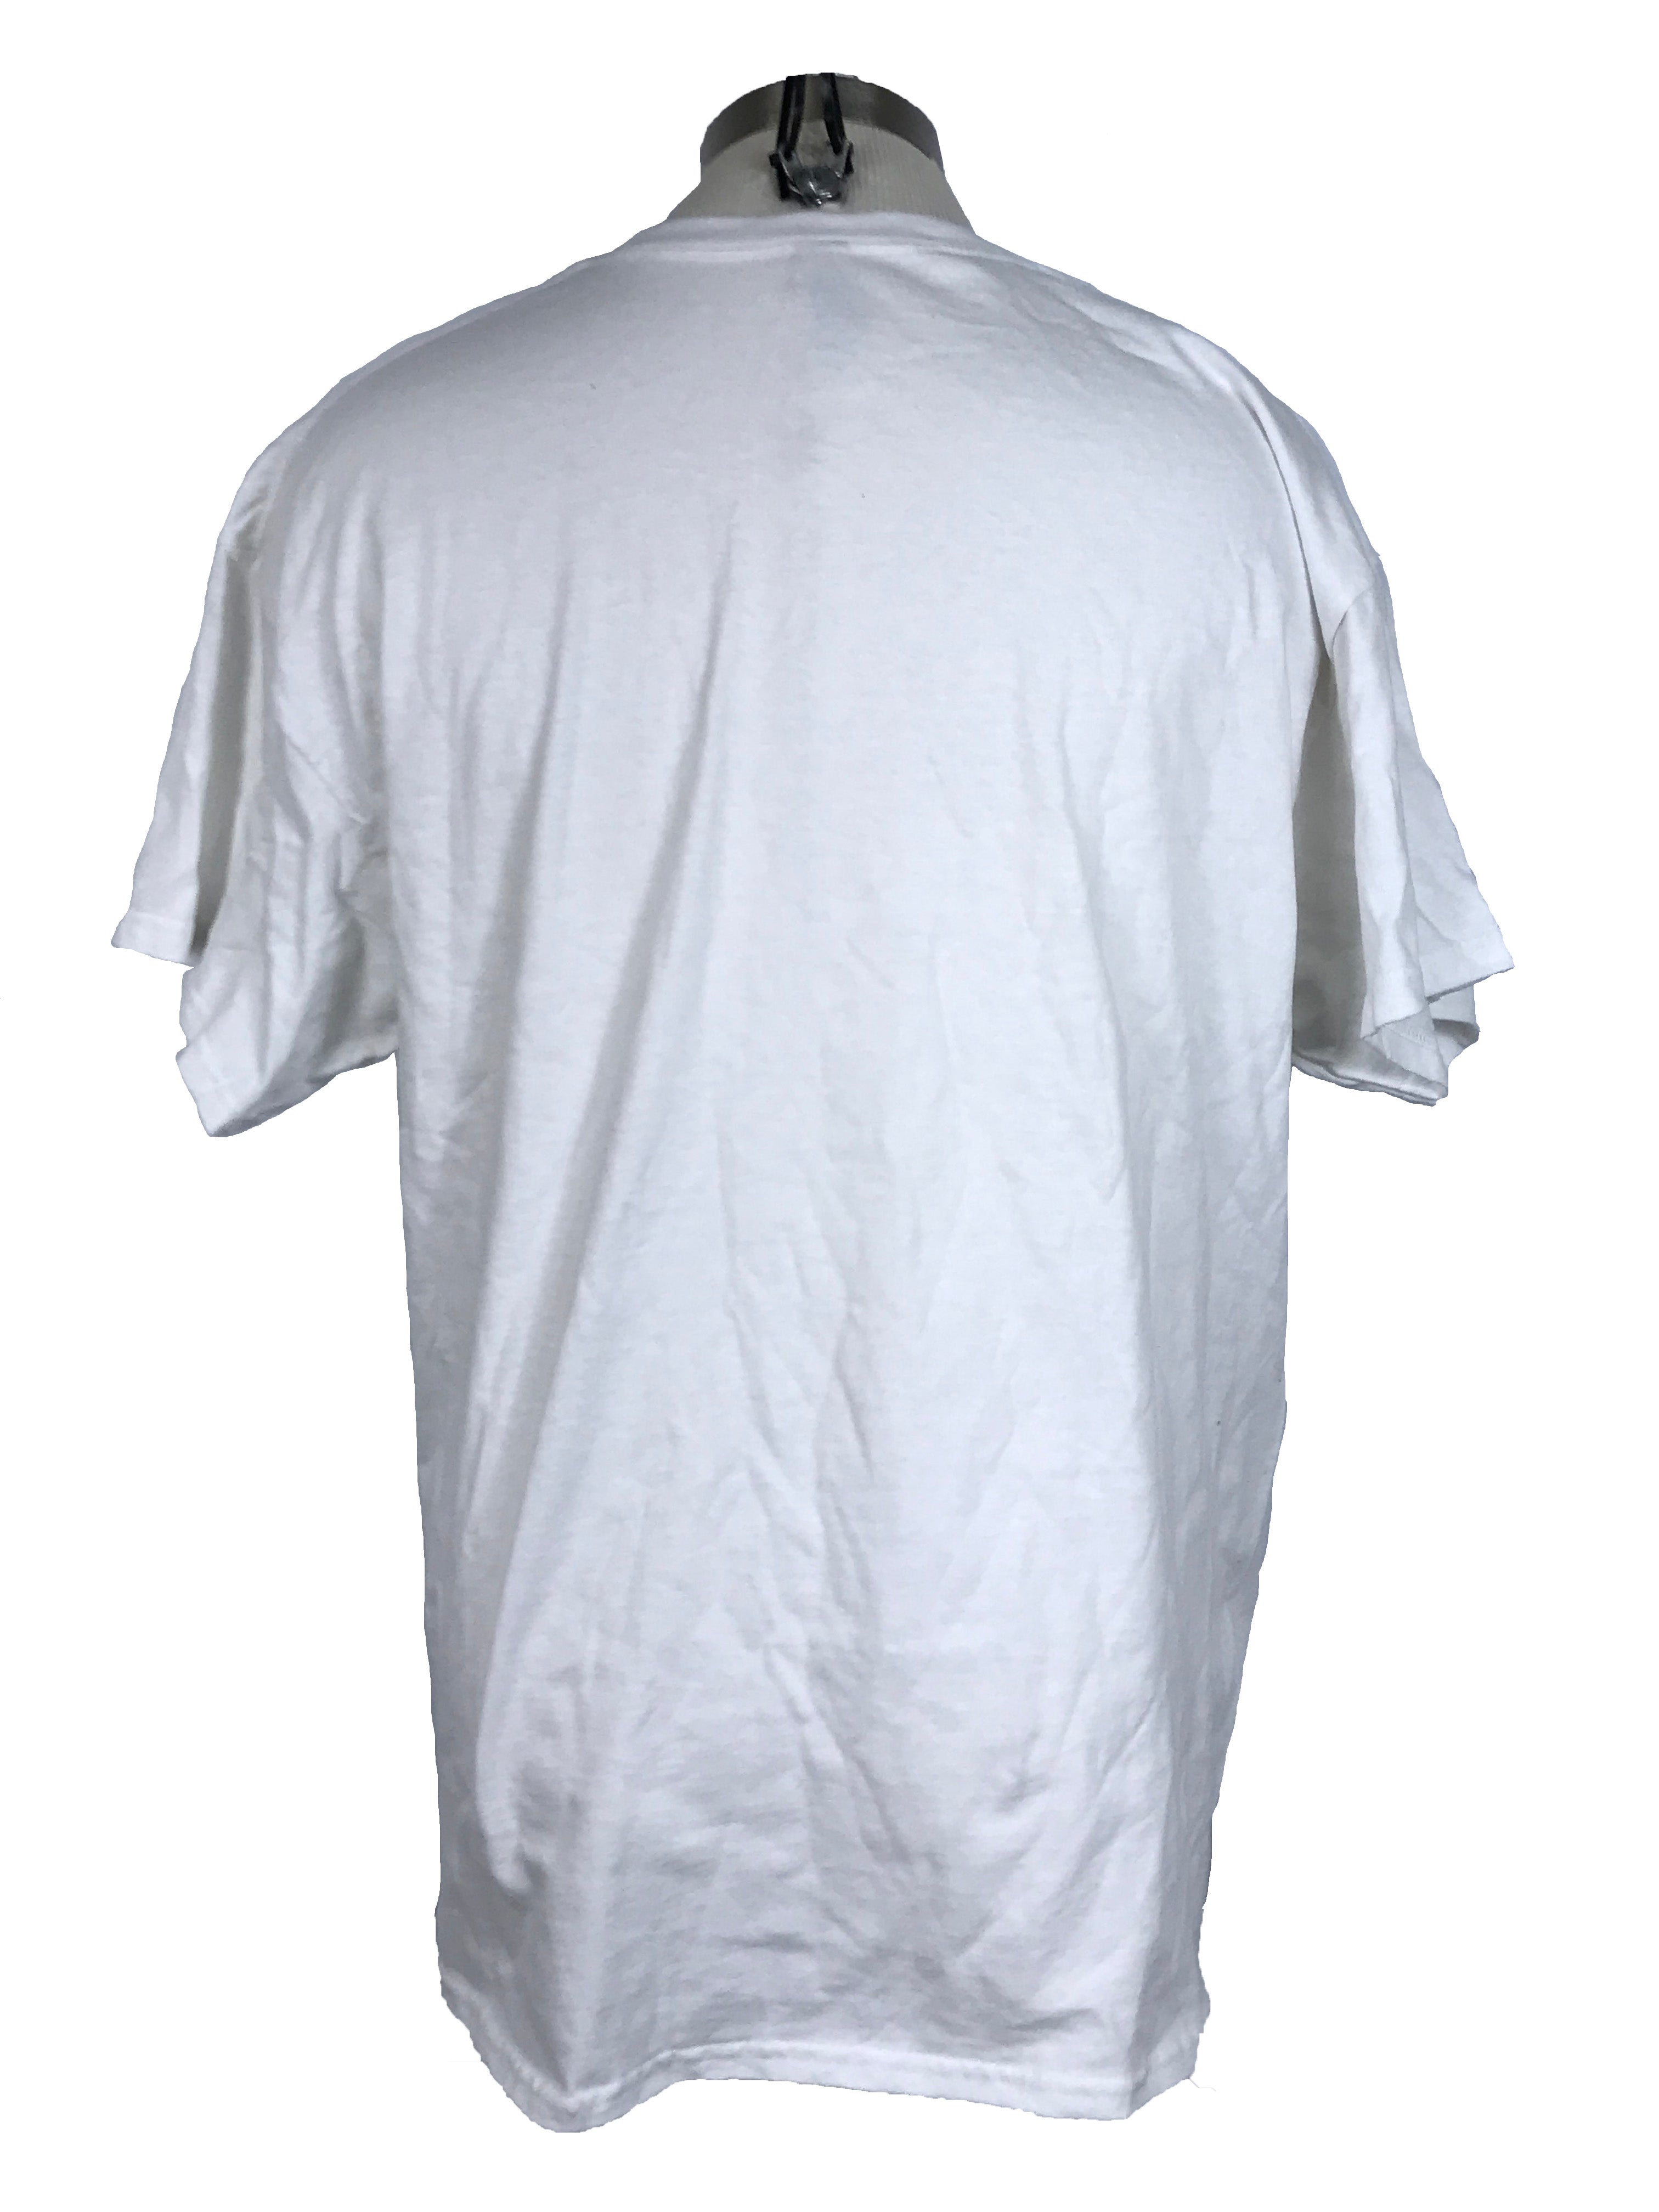 Michigan State University White T-shirt Unisex Size Medium